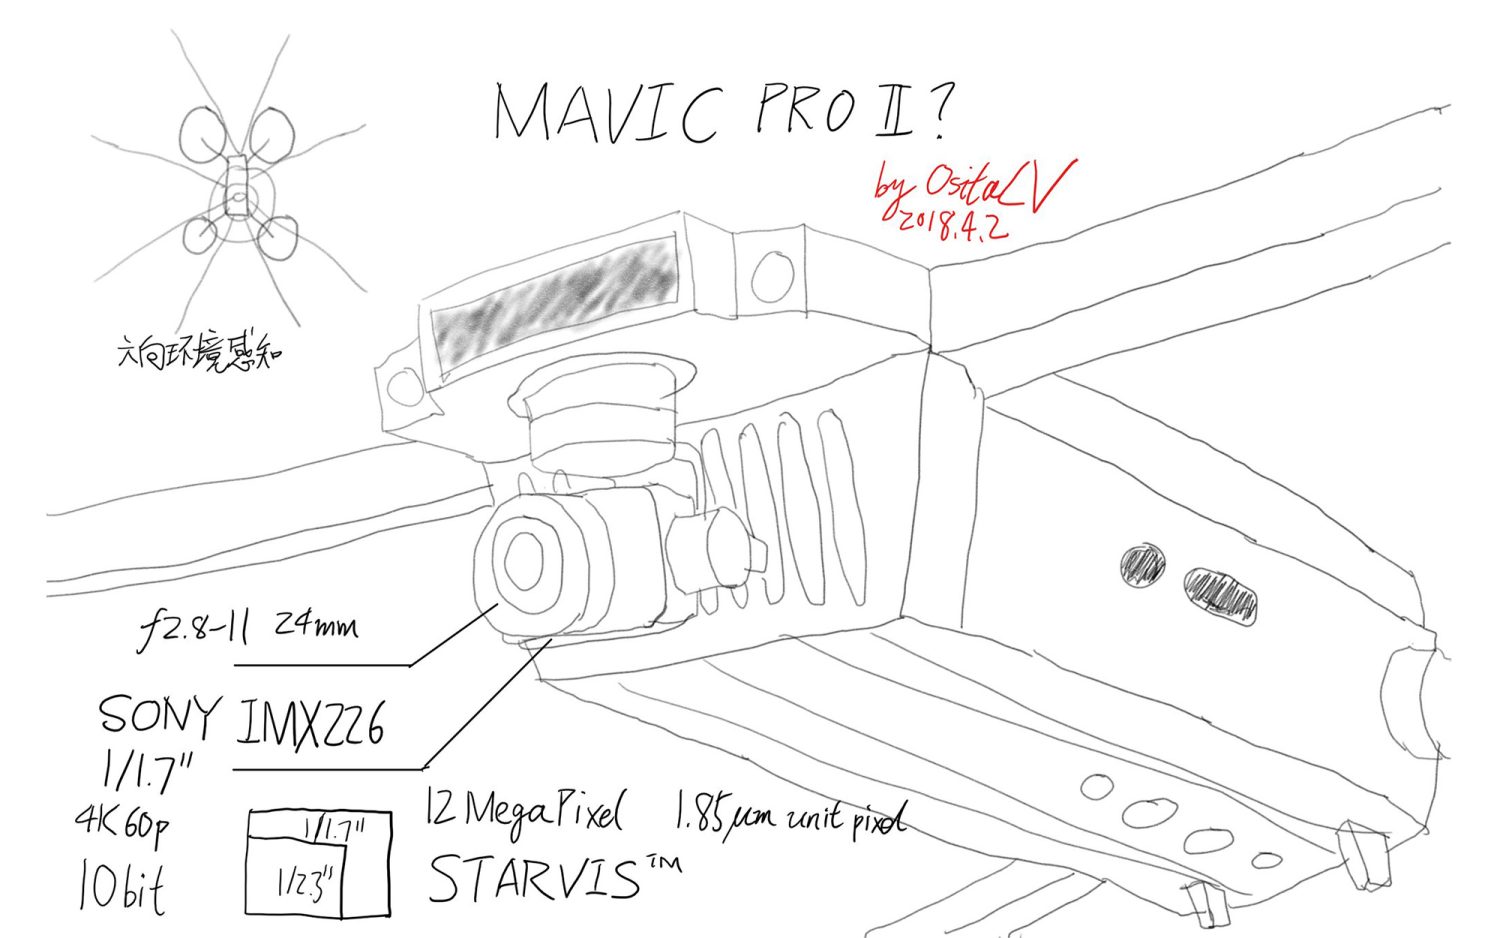 Mavic Pro II